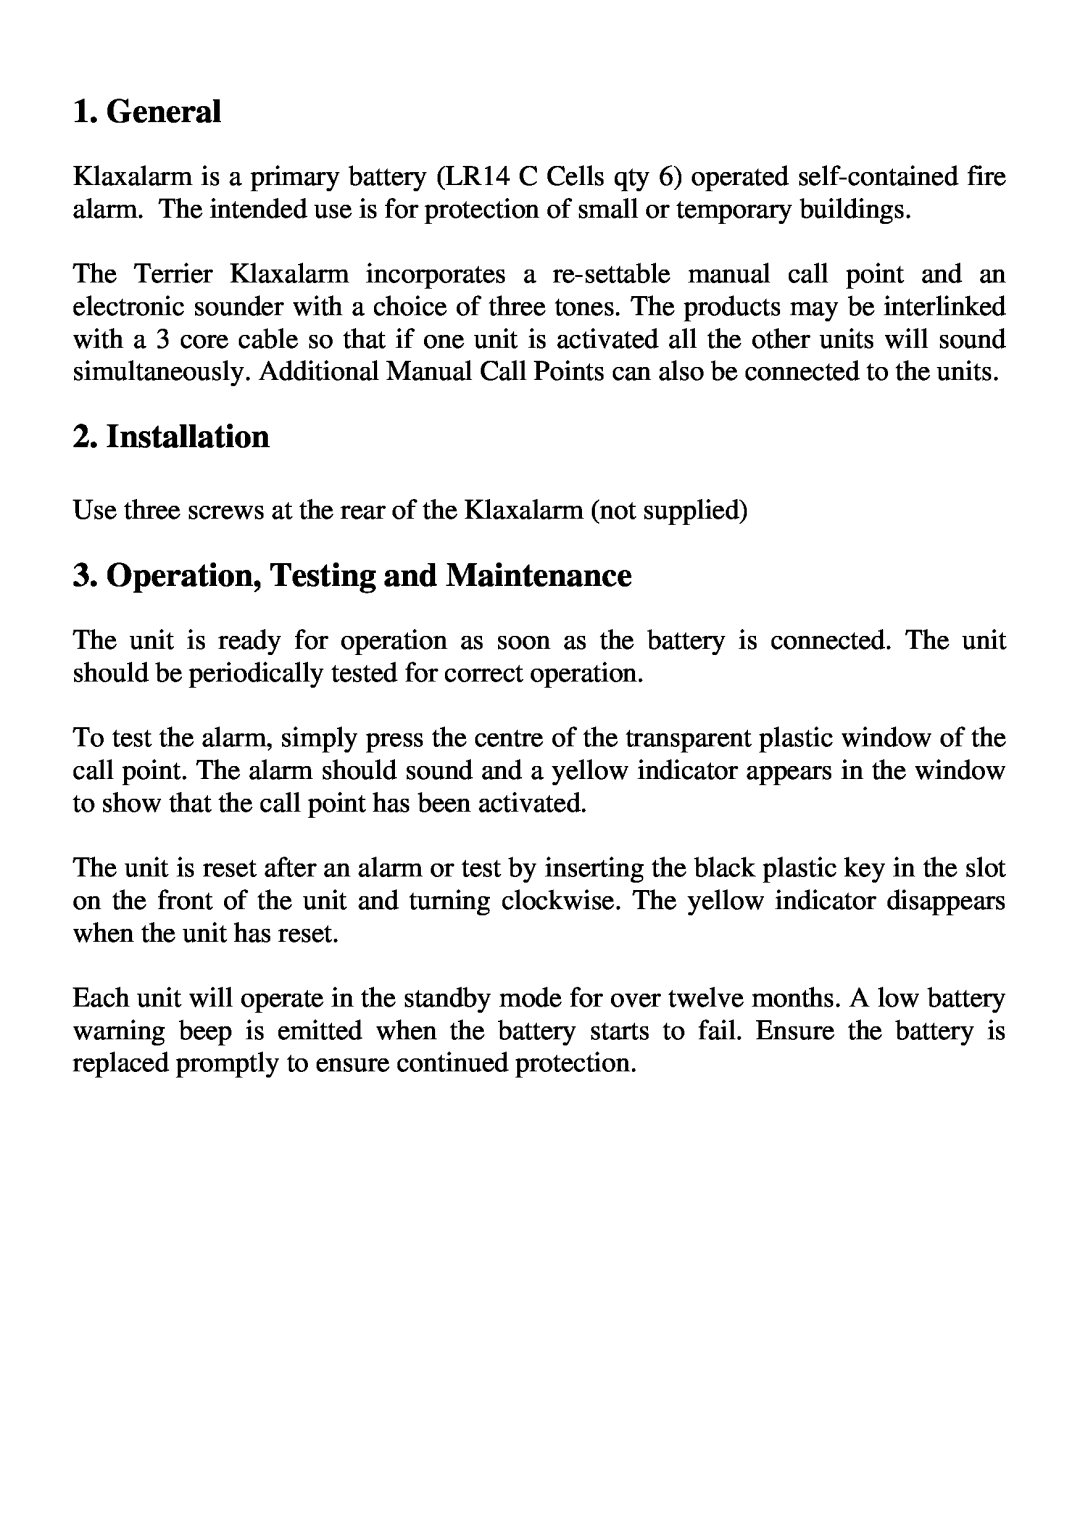 Klaxon 18-980181 installation instructions General, Installation, Operation, Testing and Maintenance 